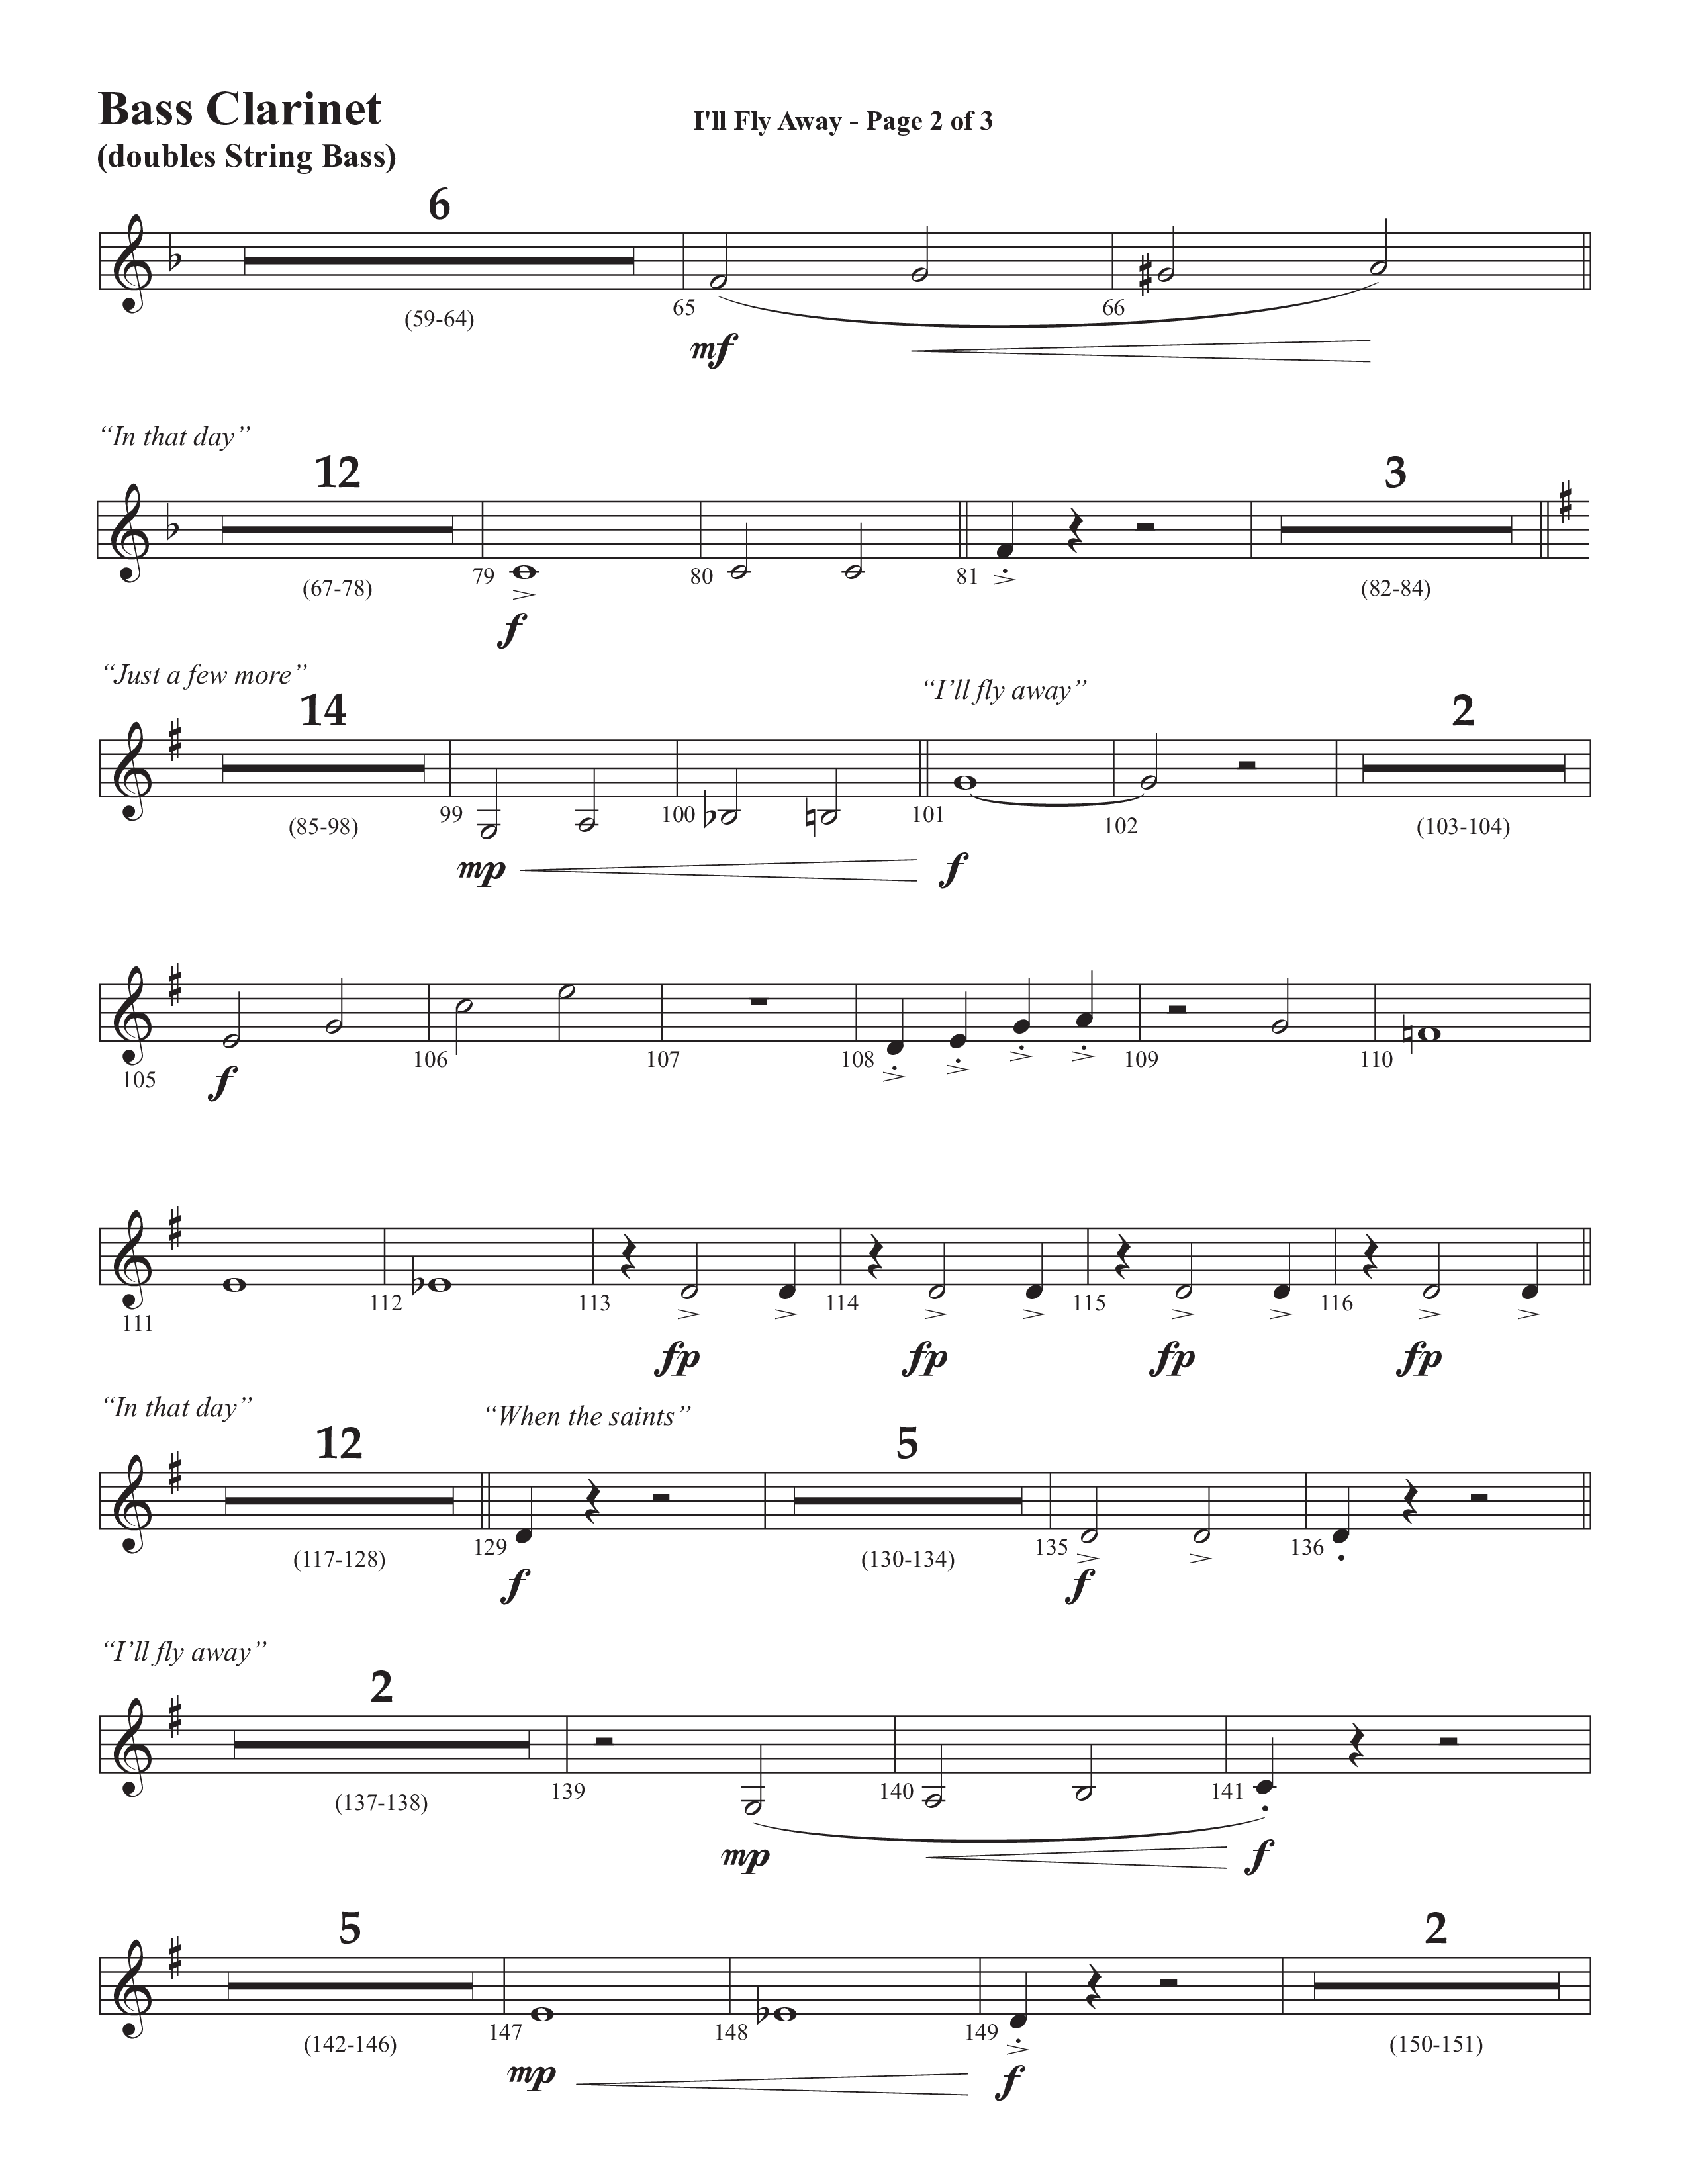 I'll Fly Away (Choral Anthem SATB) Bass Clarinet (Semsen Music / Arr. Michael Lee)